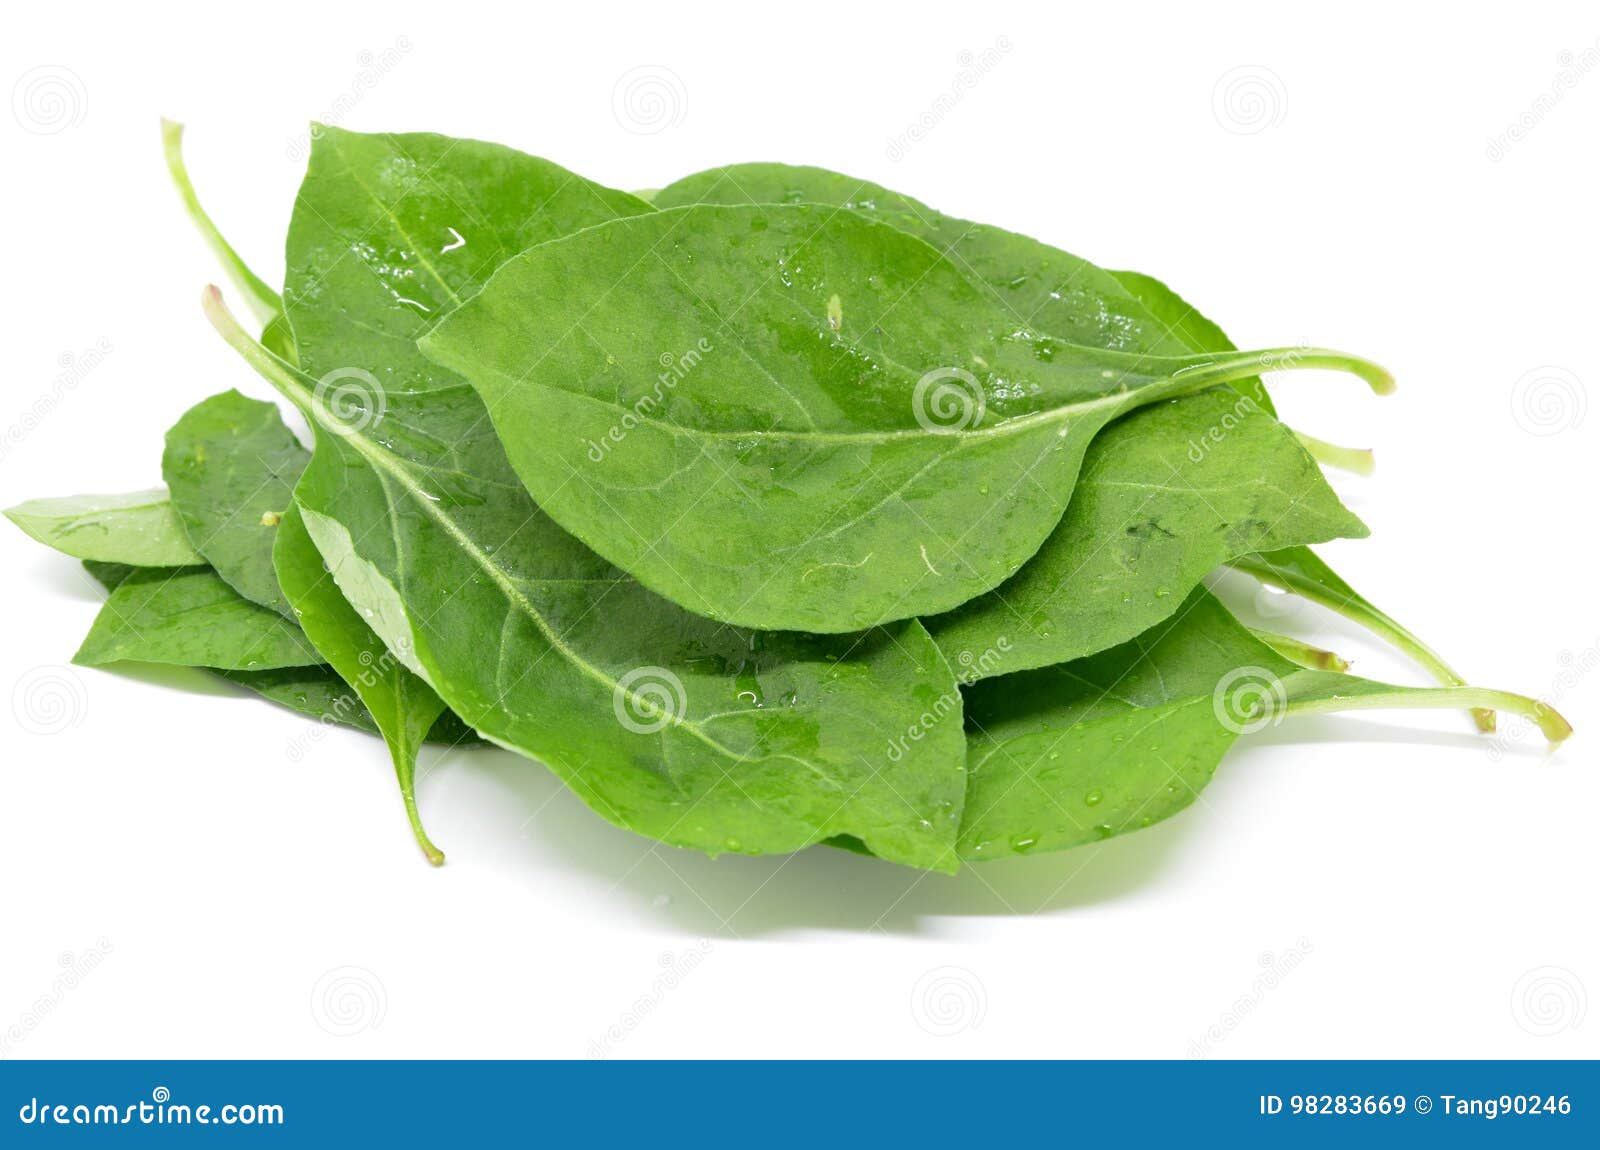 matrimony vine leaf